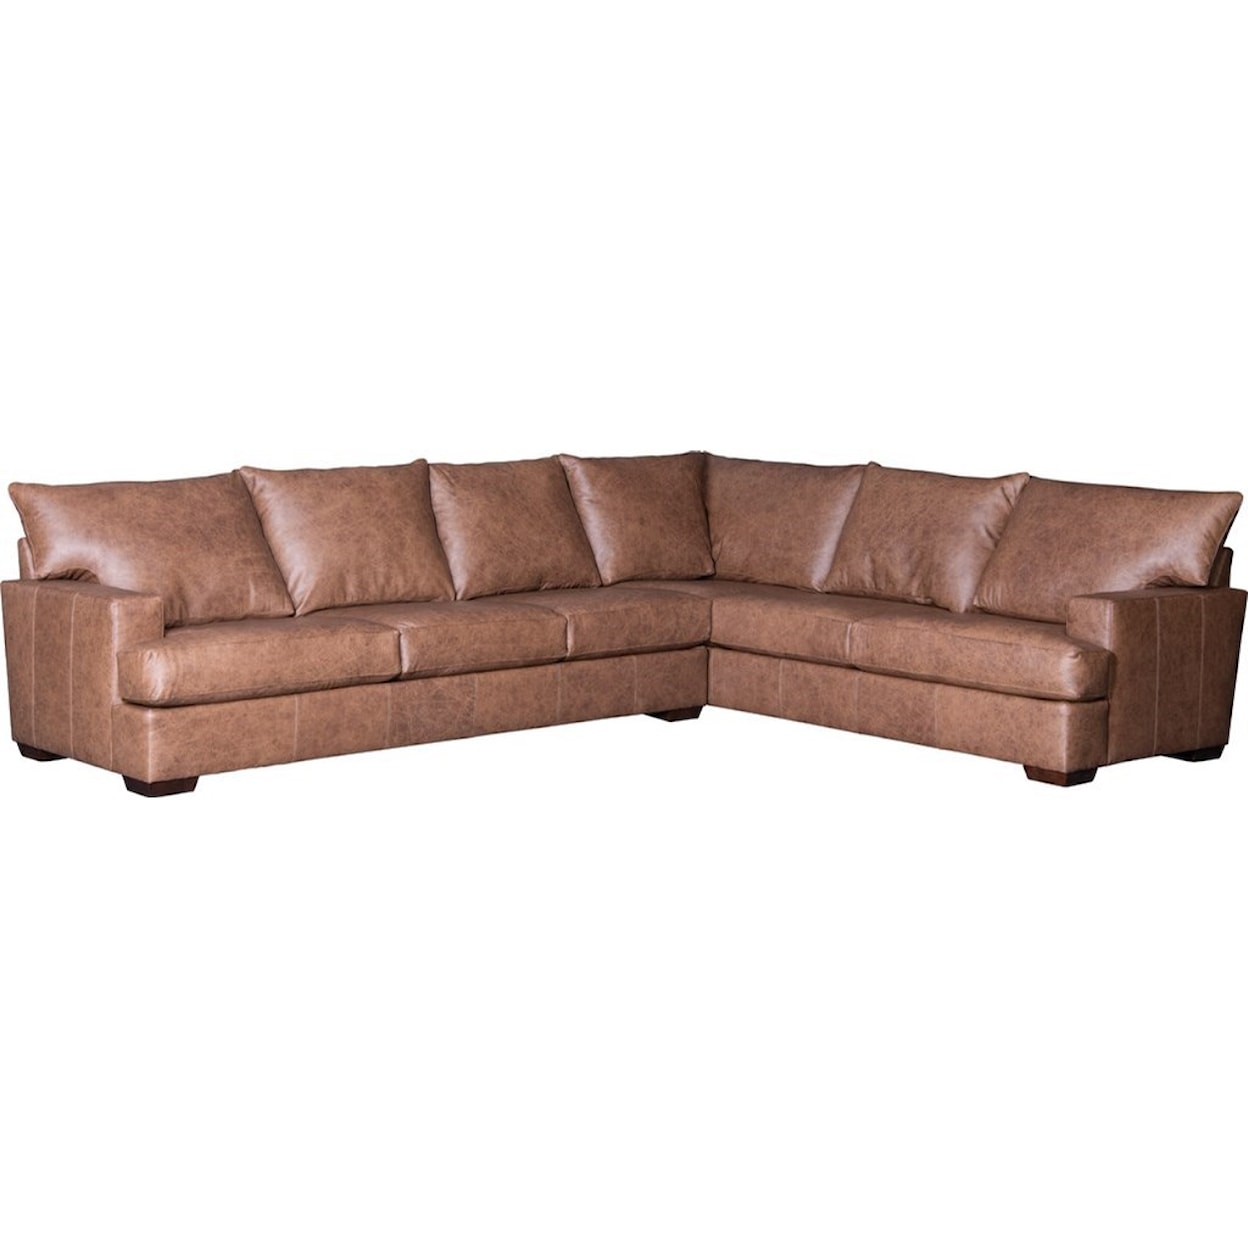 Mayo 2100 Sectional Sofa